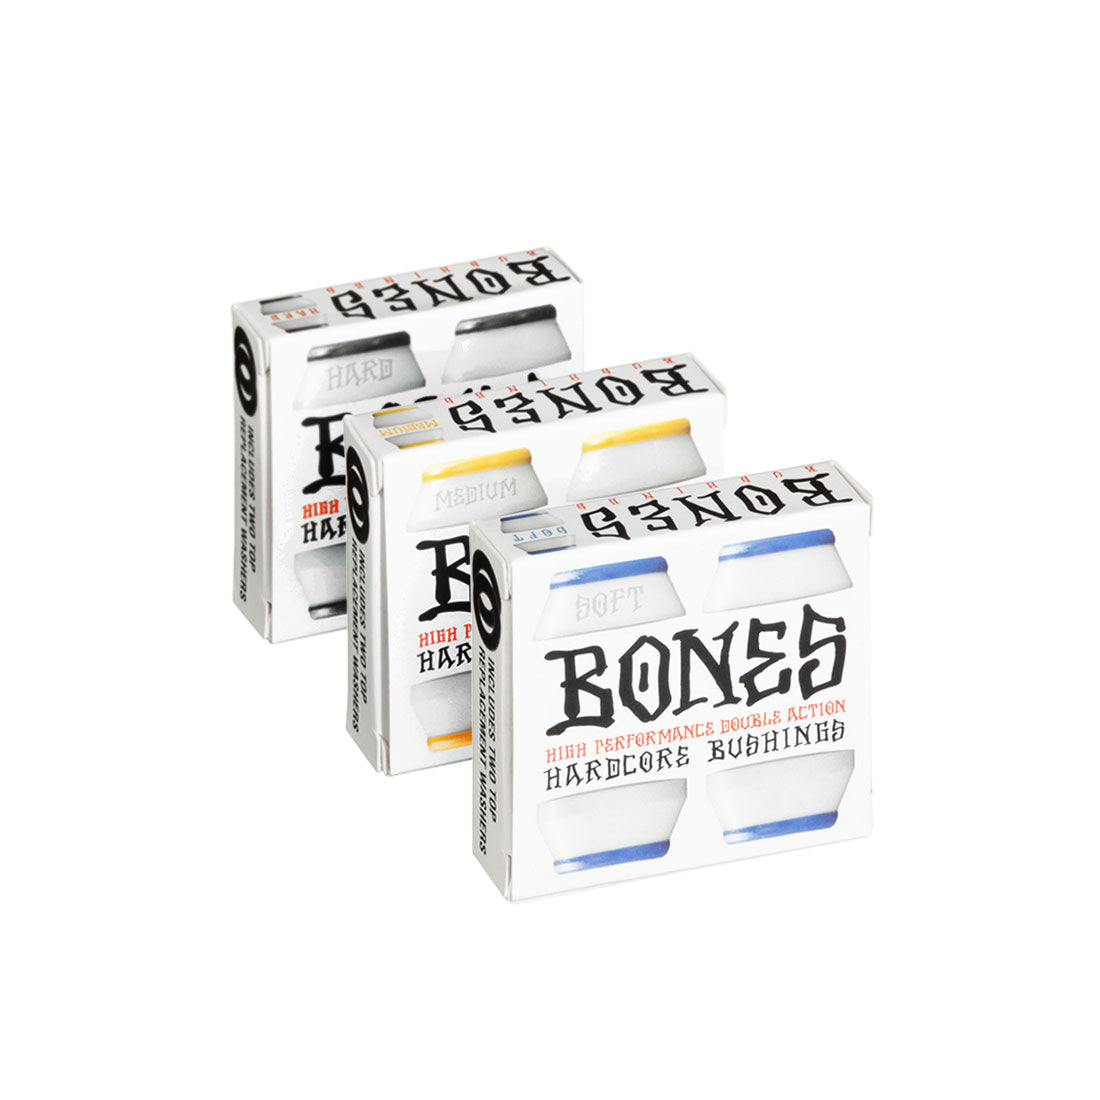 Bones Hardcore Conical Bushings 4pk - White Skateboard Hardware and Parts